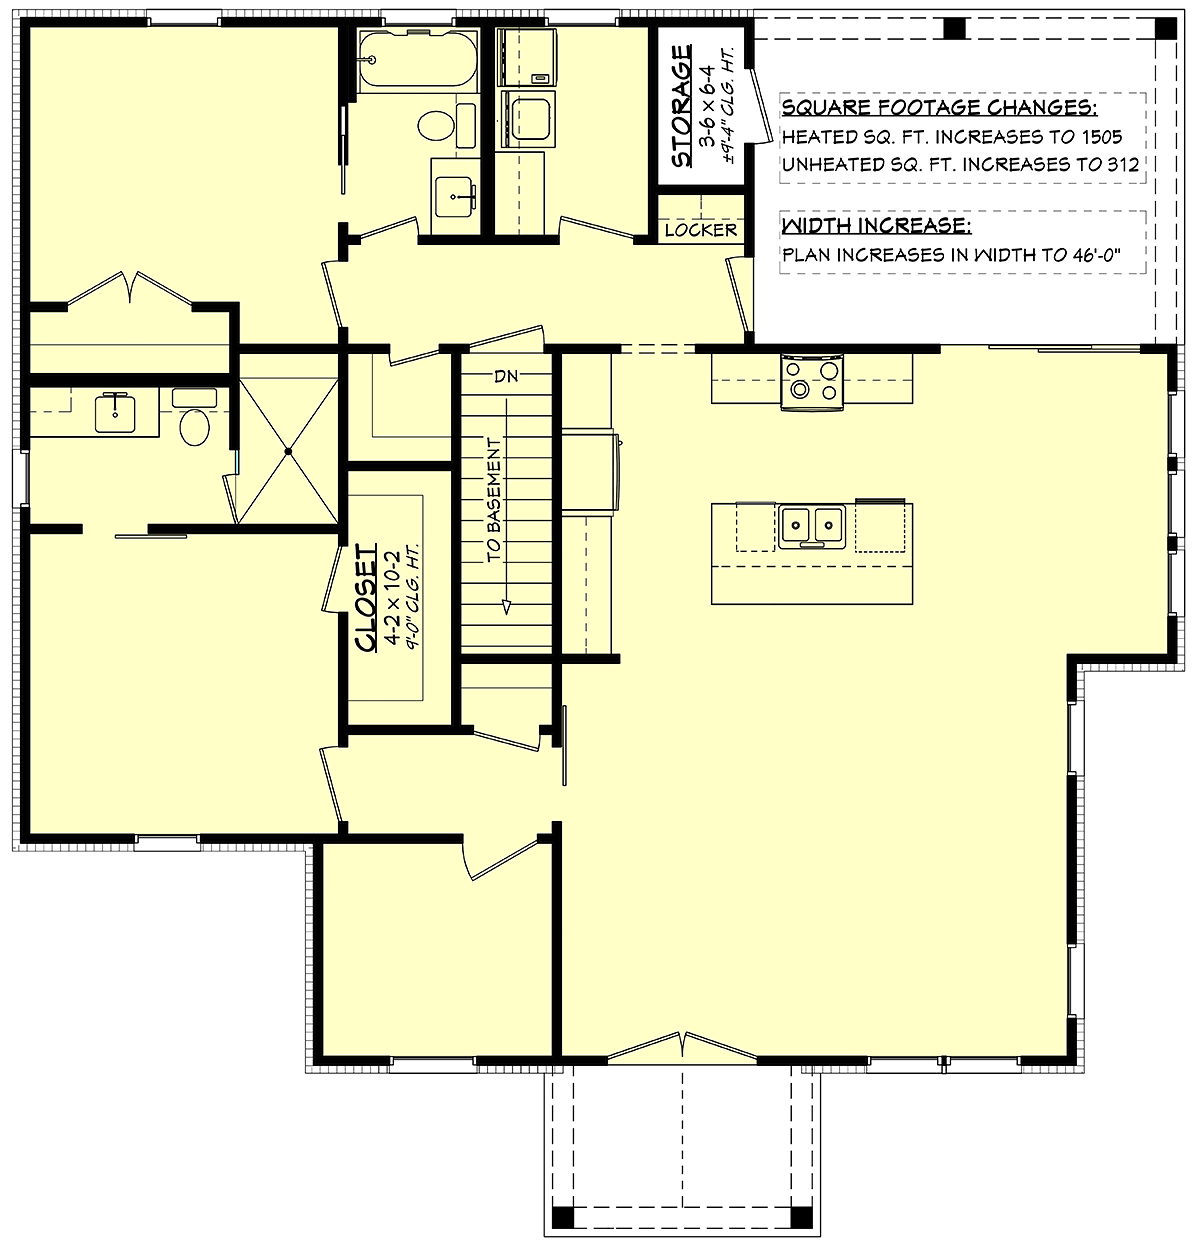 House Plan 80893 Alternate Level One